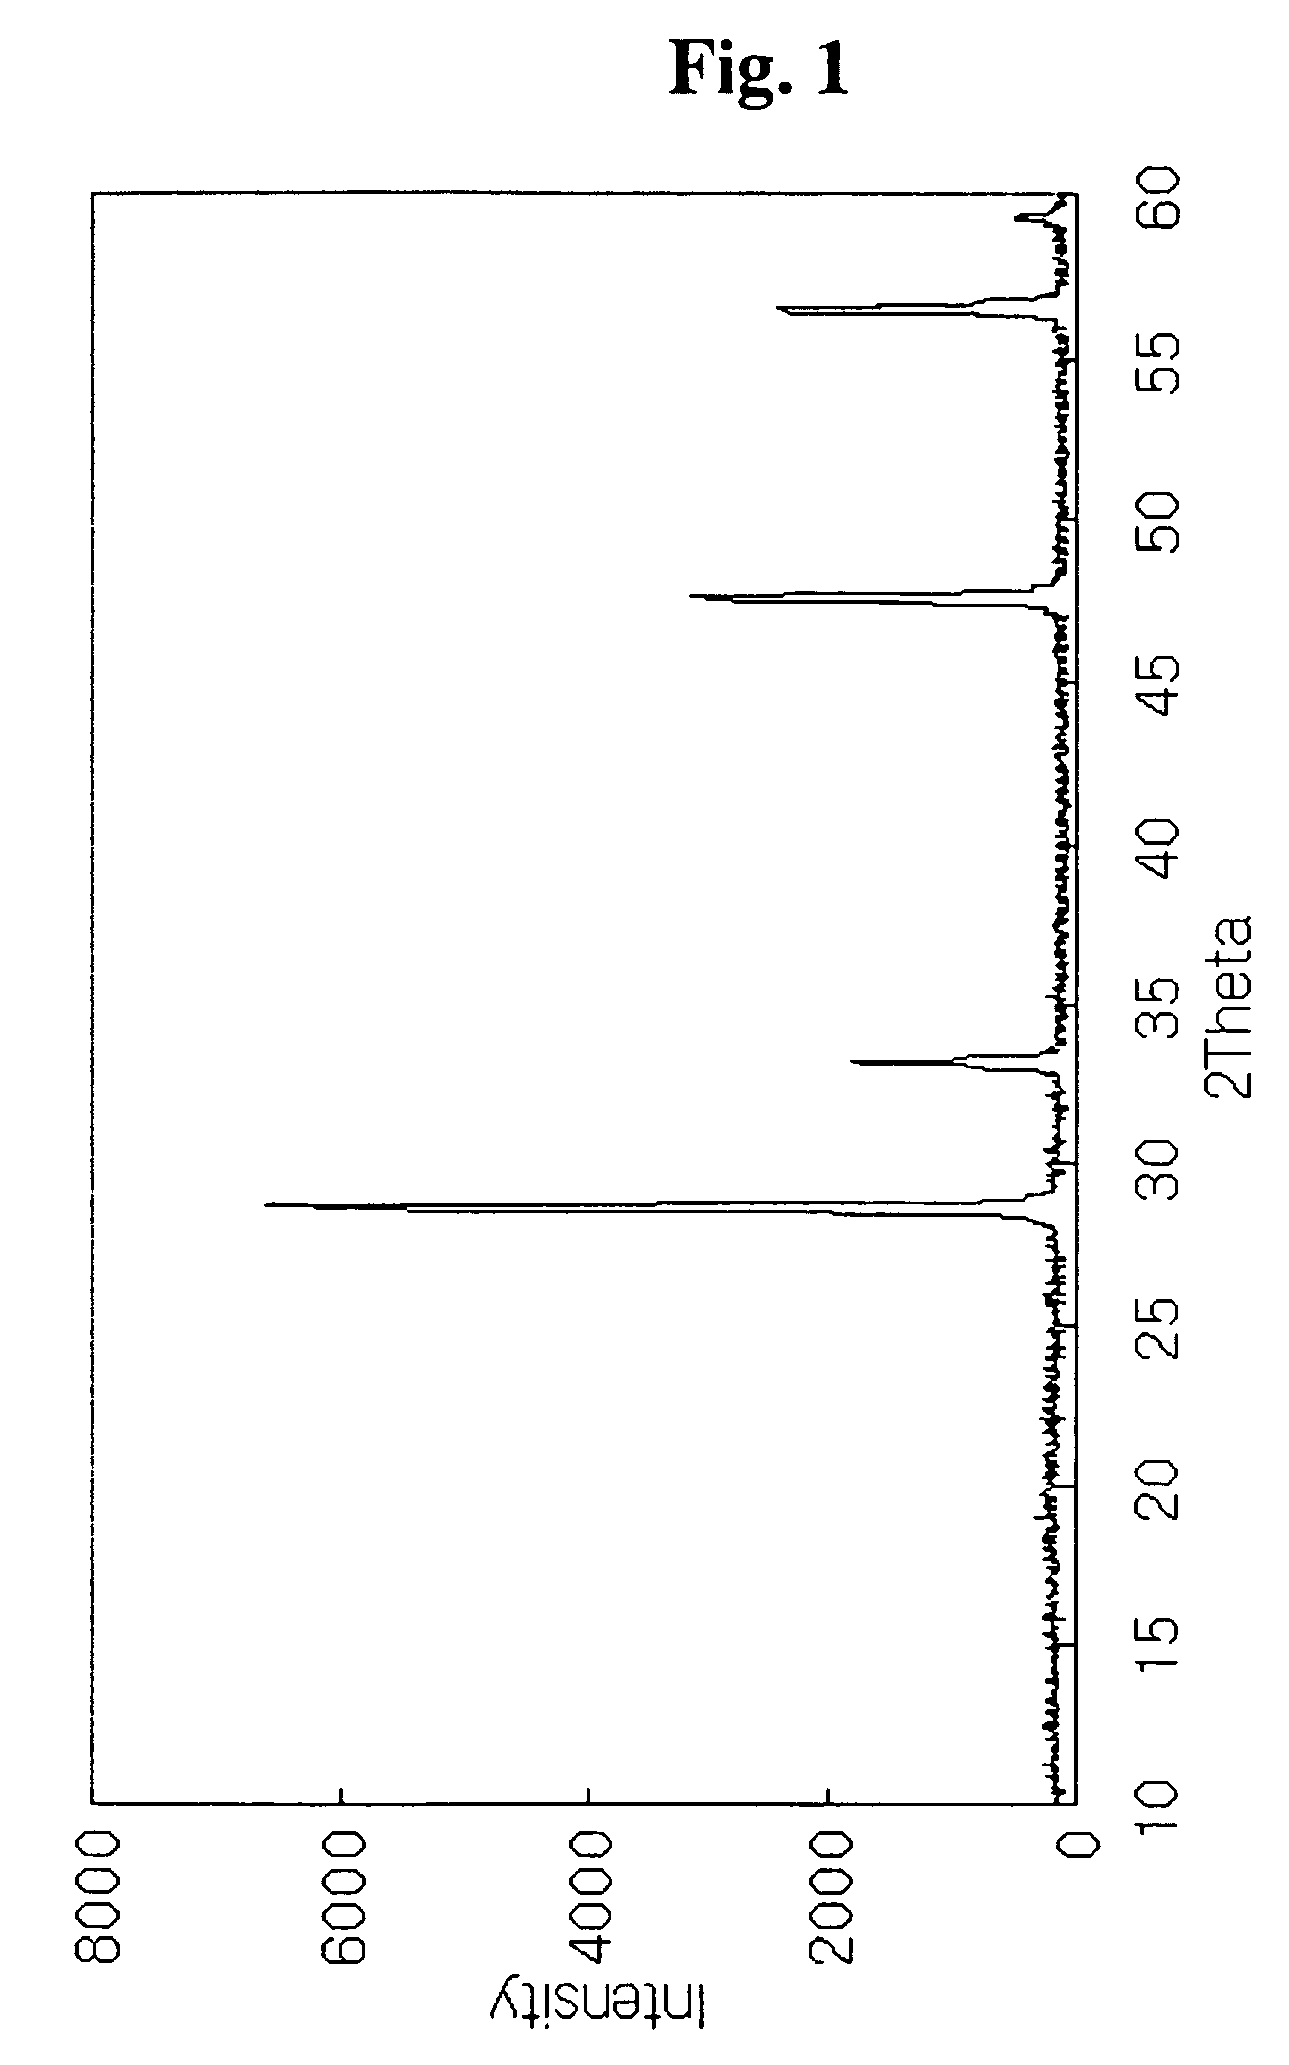 Method for preparing single crystalline cerium oxide powders